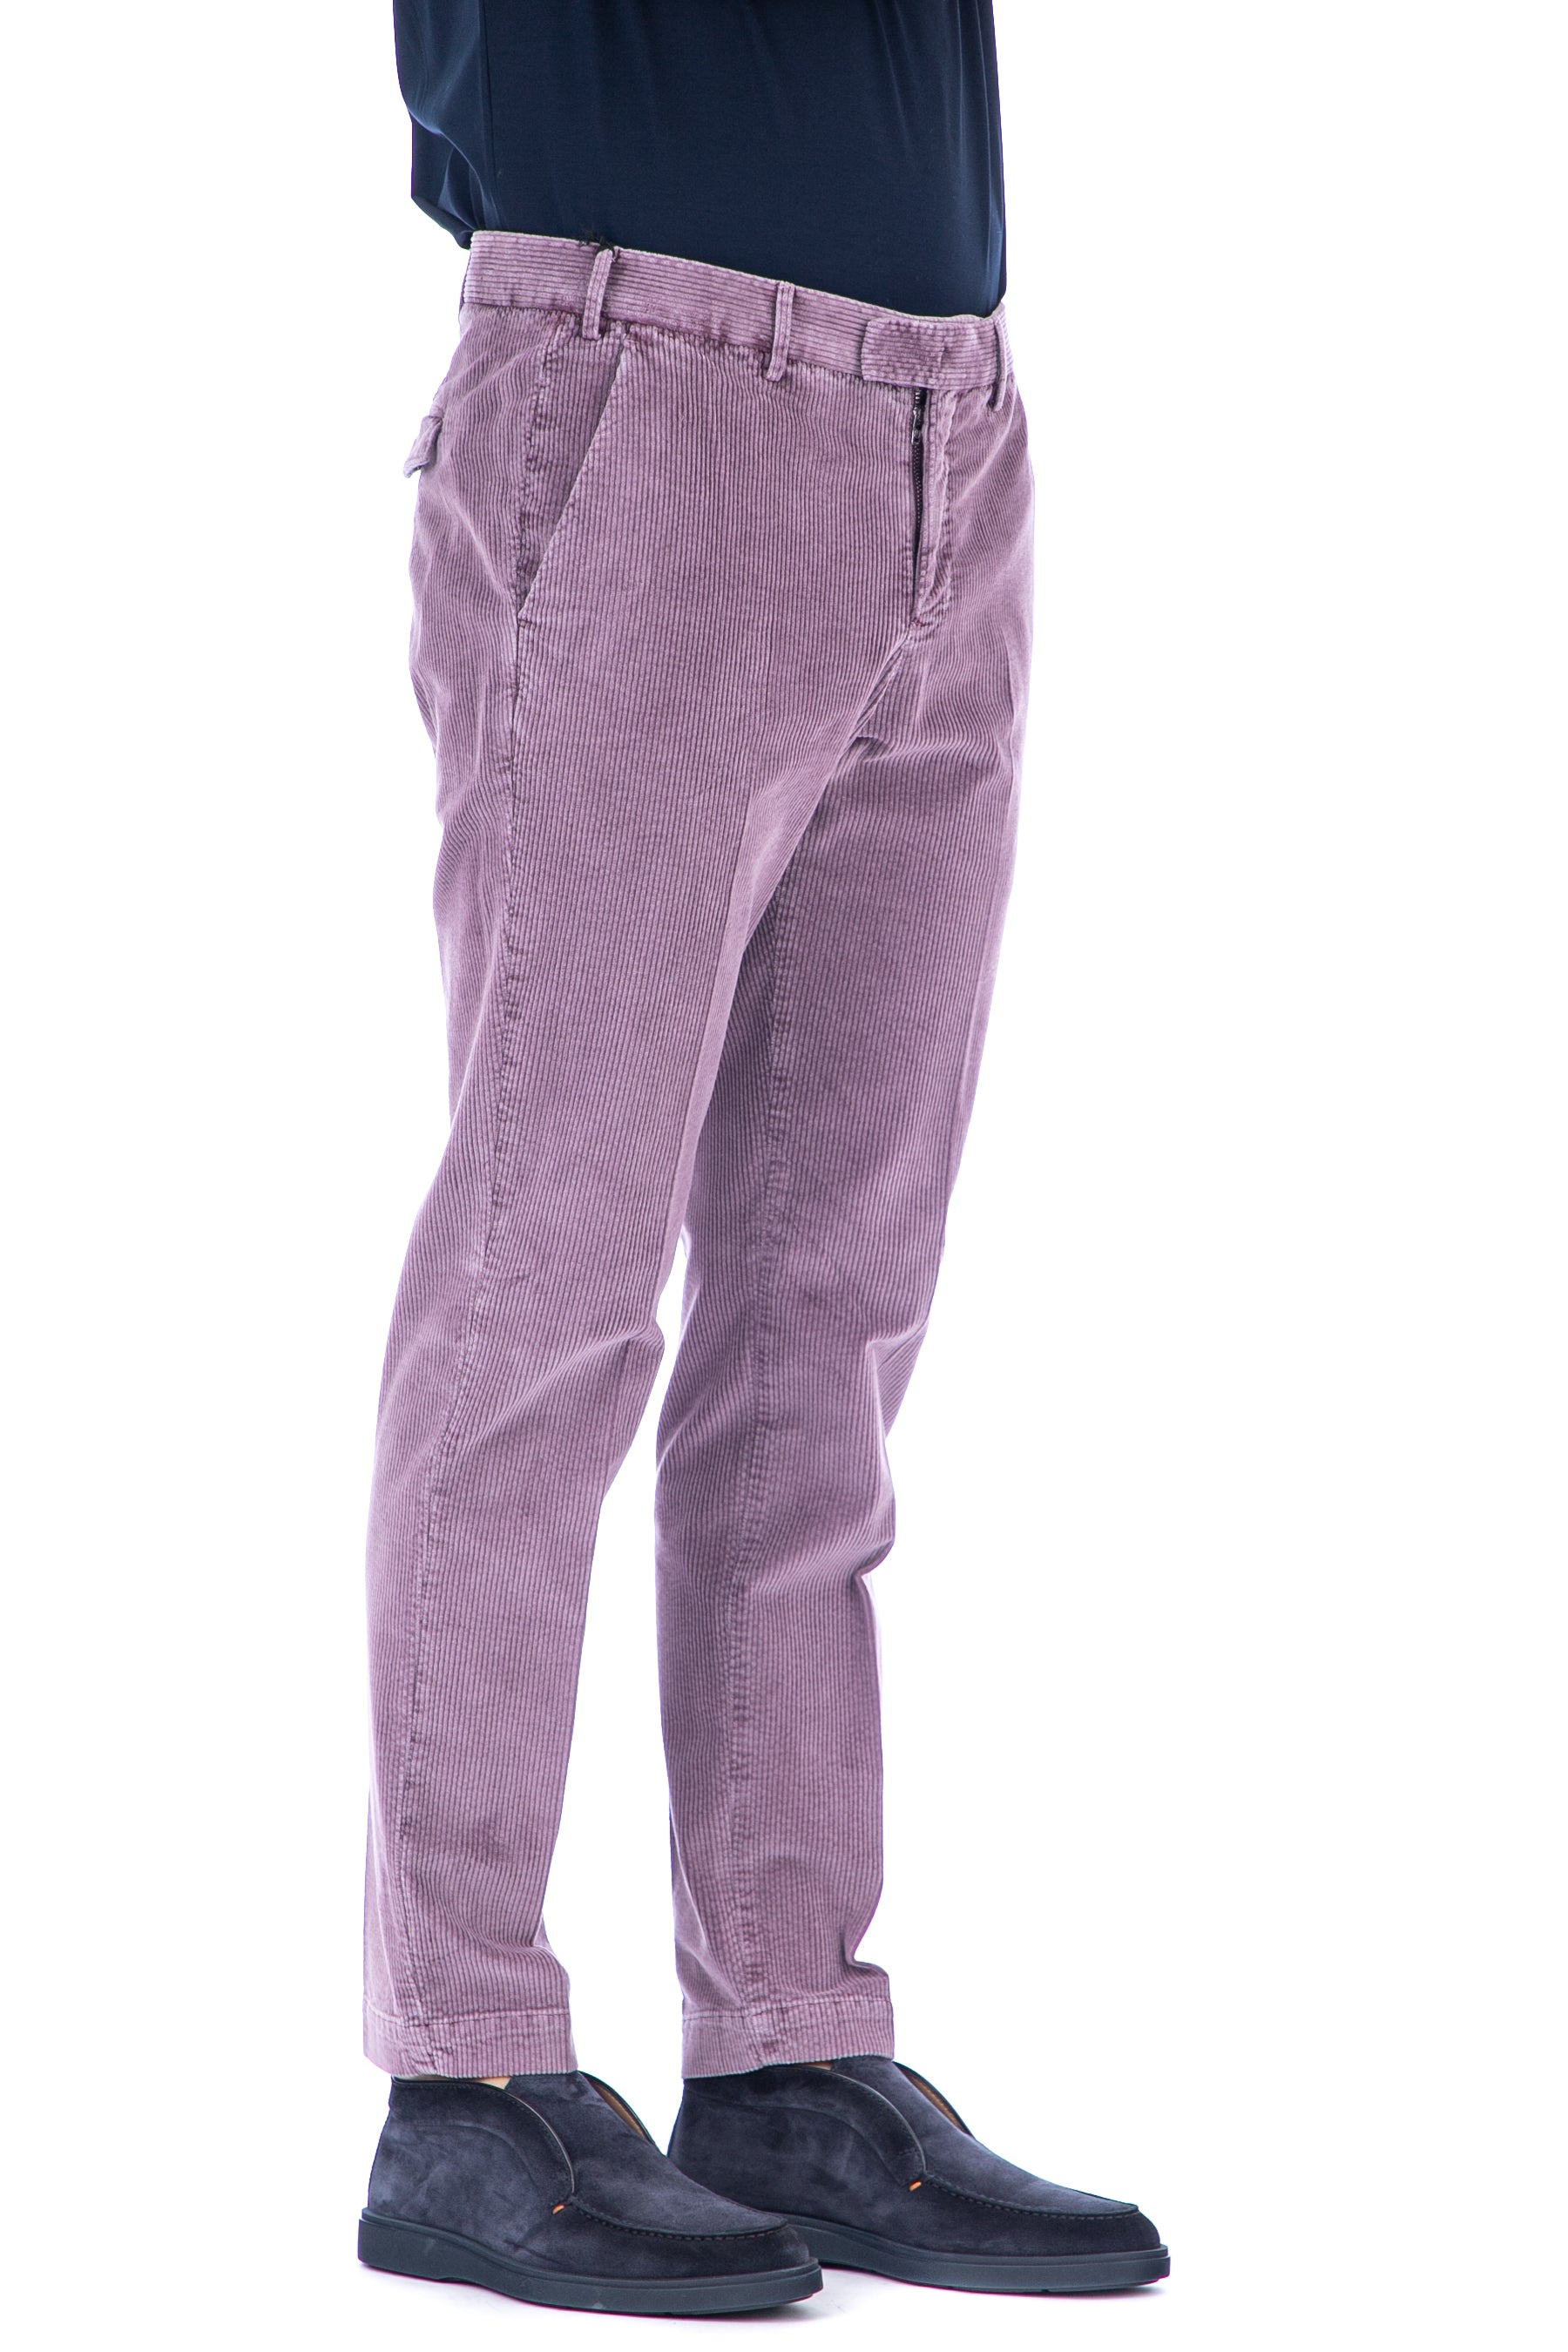 Pantalone in velluto 500 righe cotone-lyocel master fit